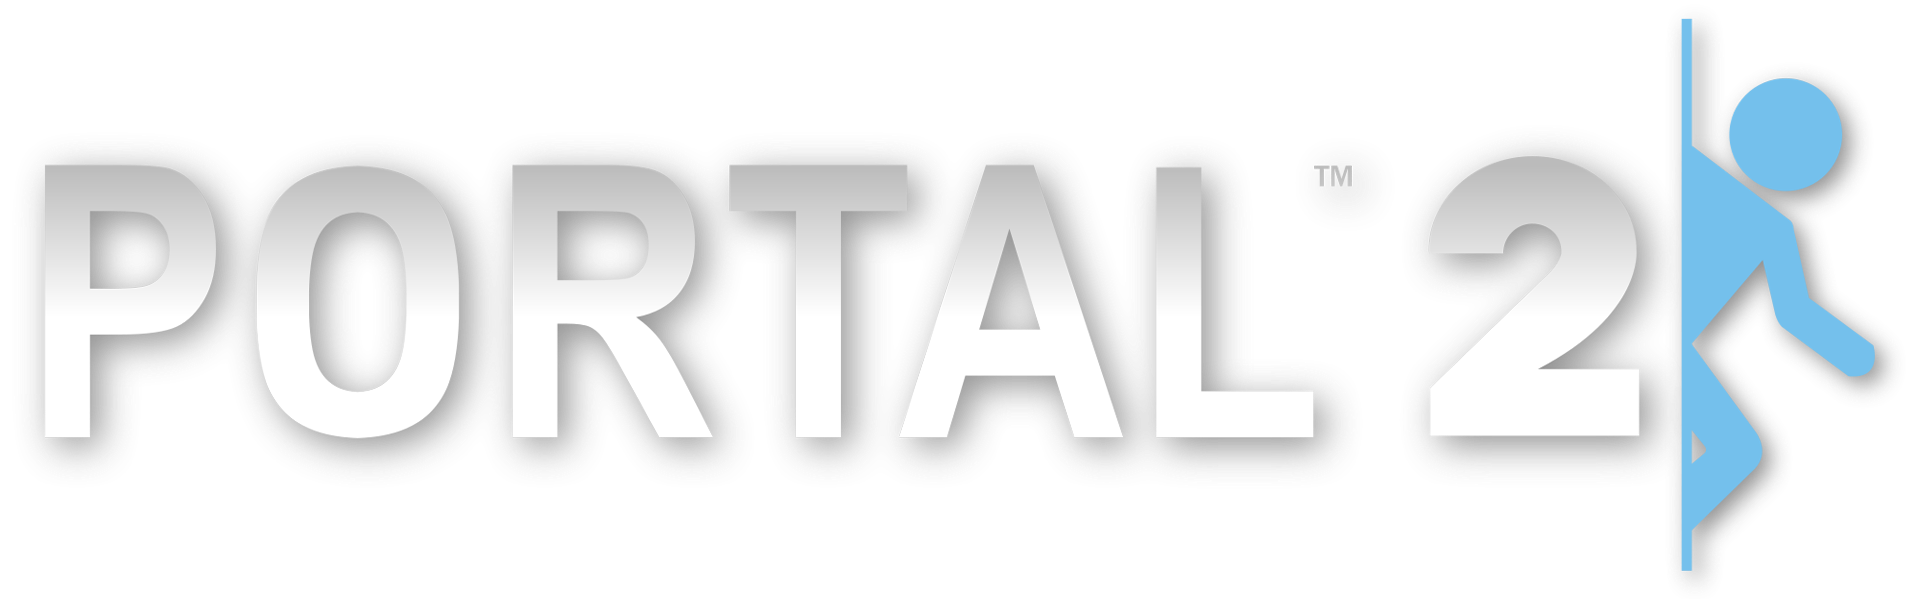 Portal 2 can play фото 23